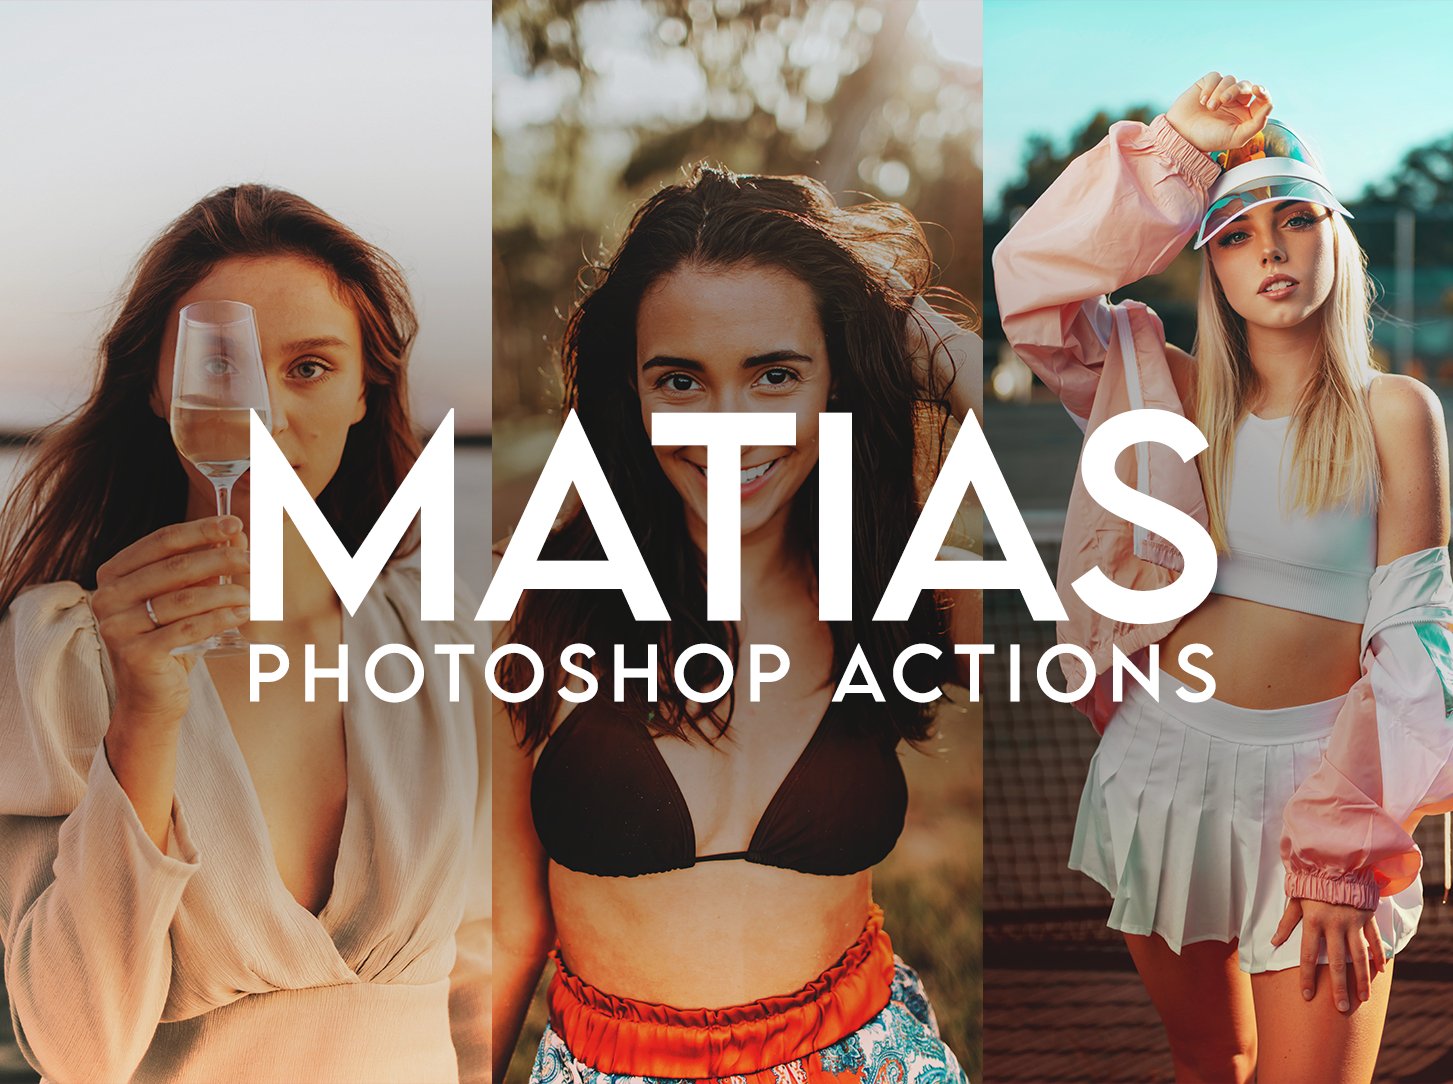 Matias Photoshop Actionscover image.